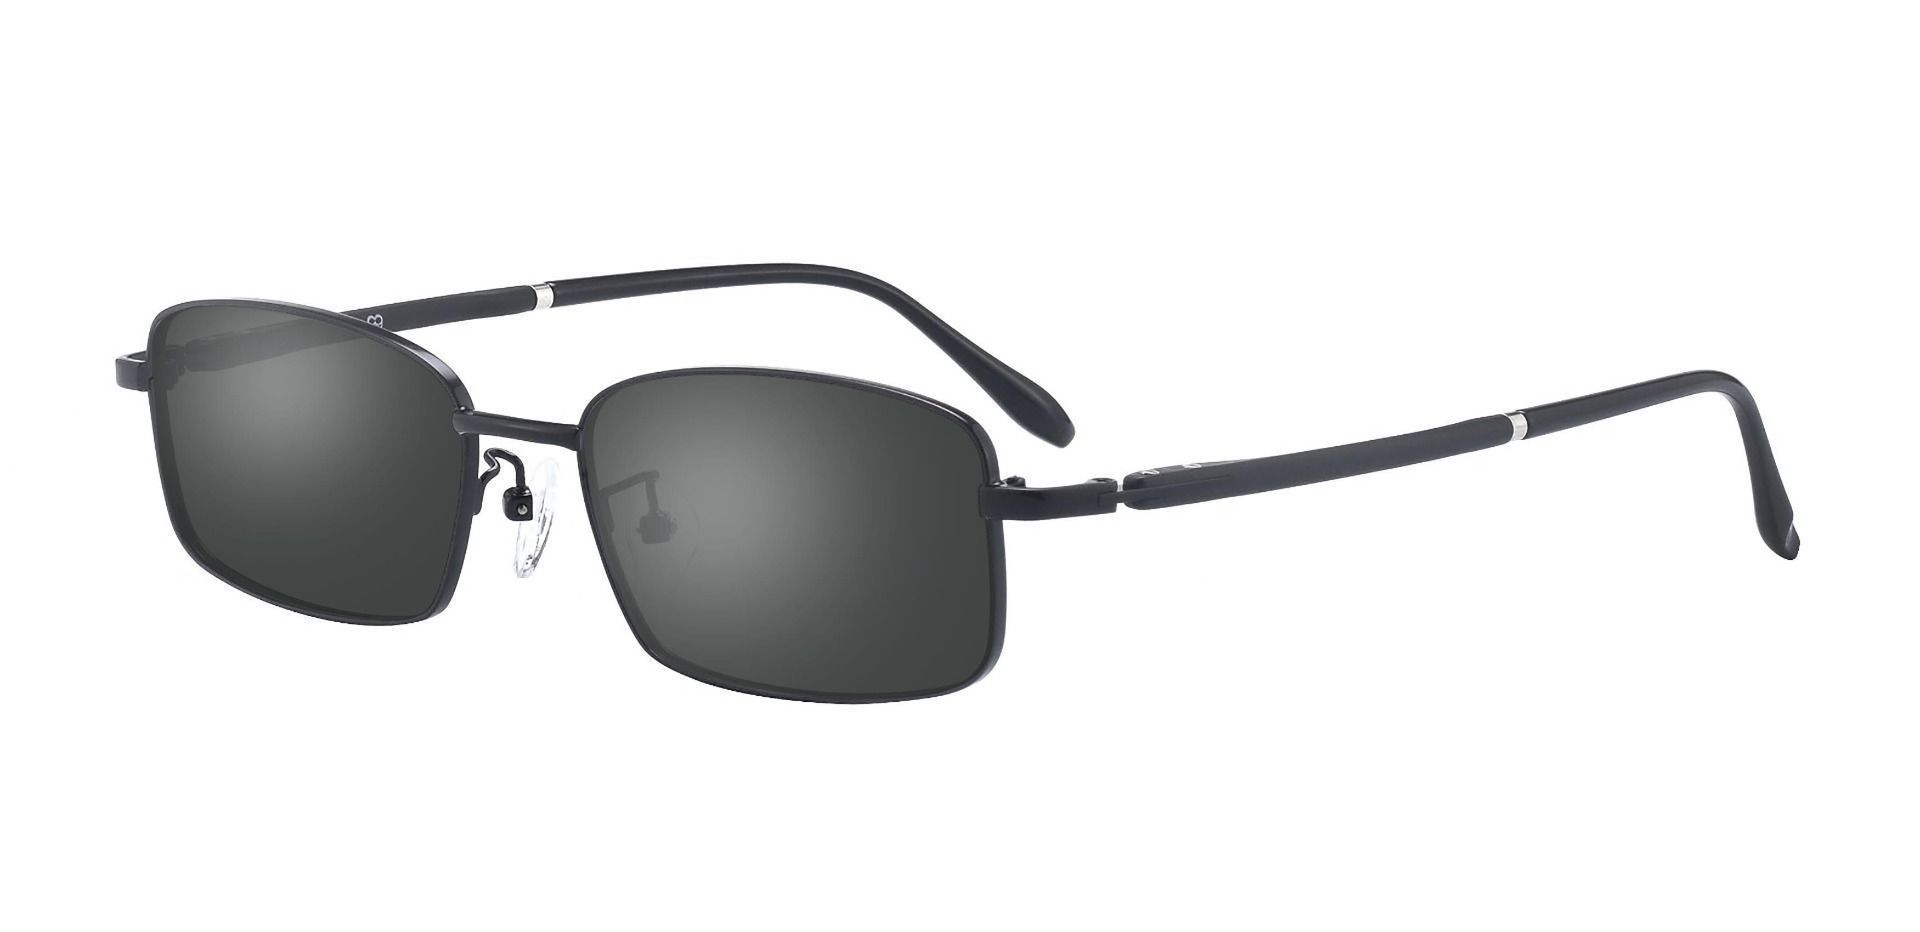 Press Rectangle Prescription Sunglasses - Black Frame With Gray Lenses